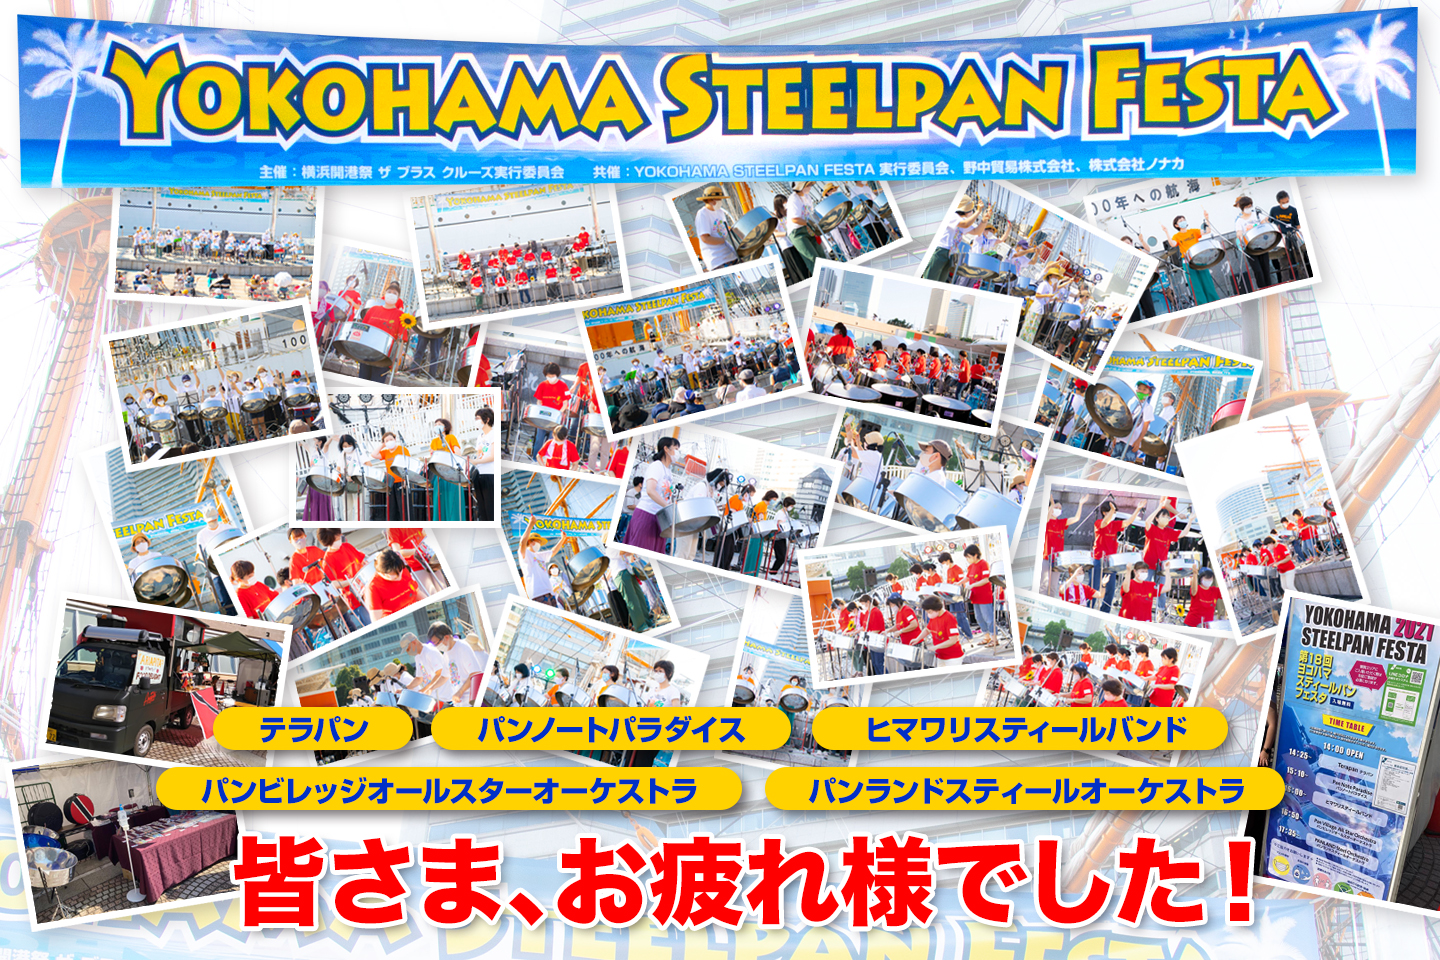 YOKOHAMA STEELPAN FESTA 2021